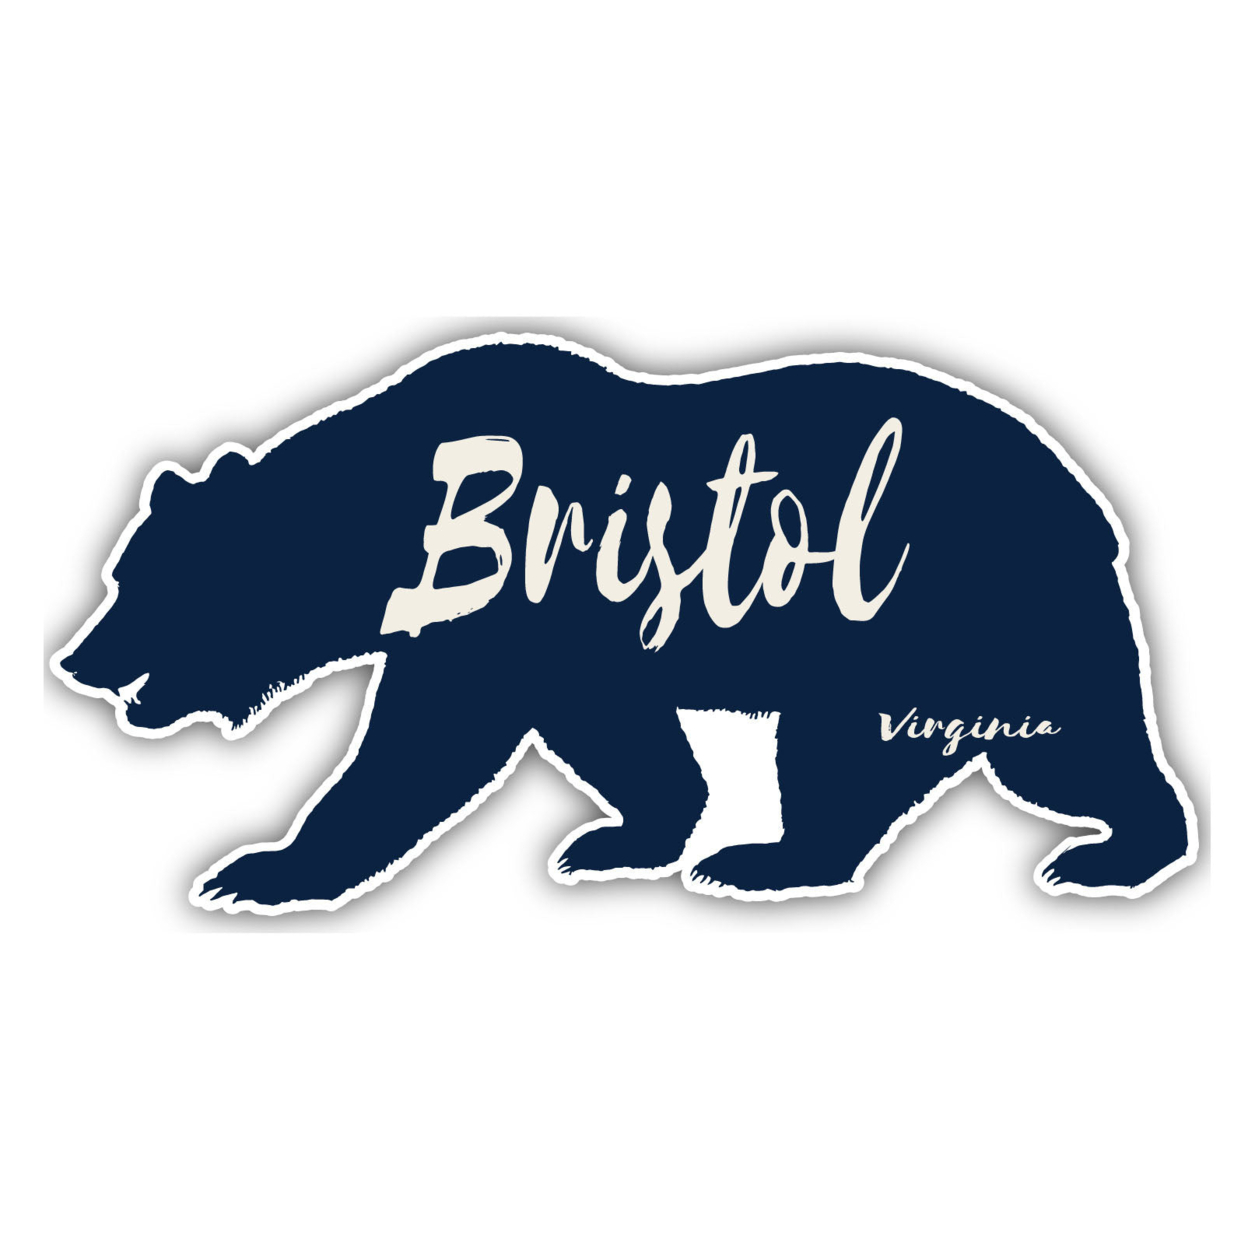 Bristol Virginia Souvenir Decorative Stickers (Choose Theme And Size) - 4-Pack, 8-Inch, Bear